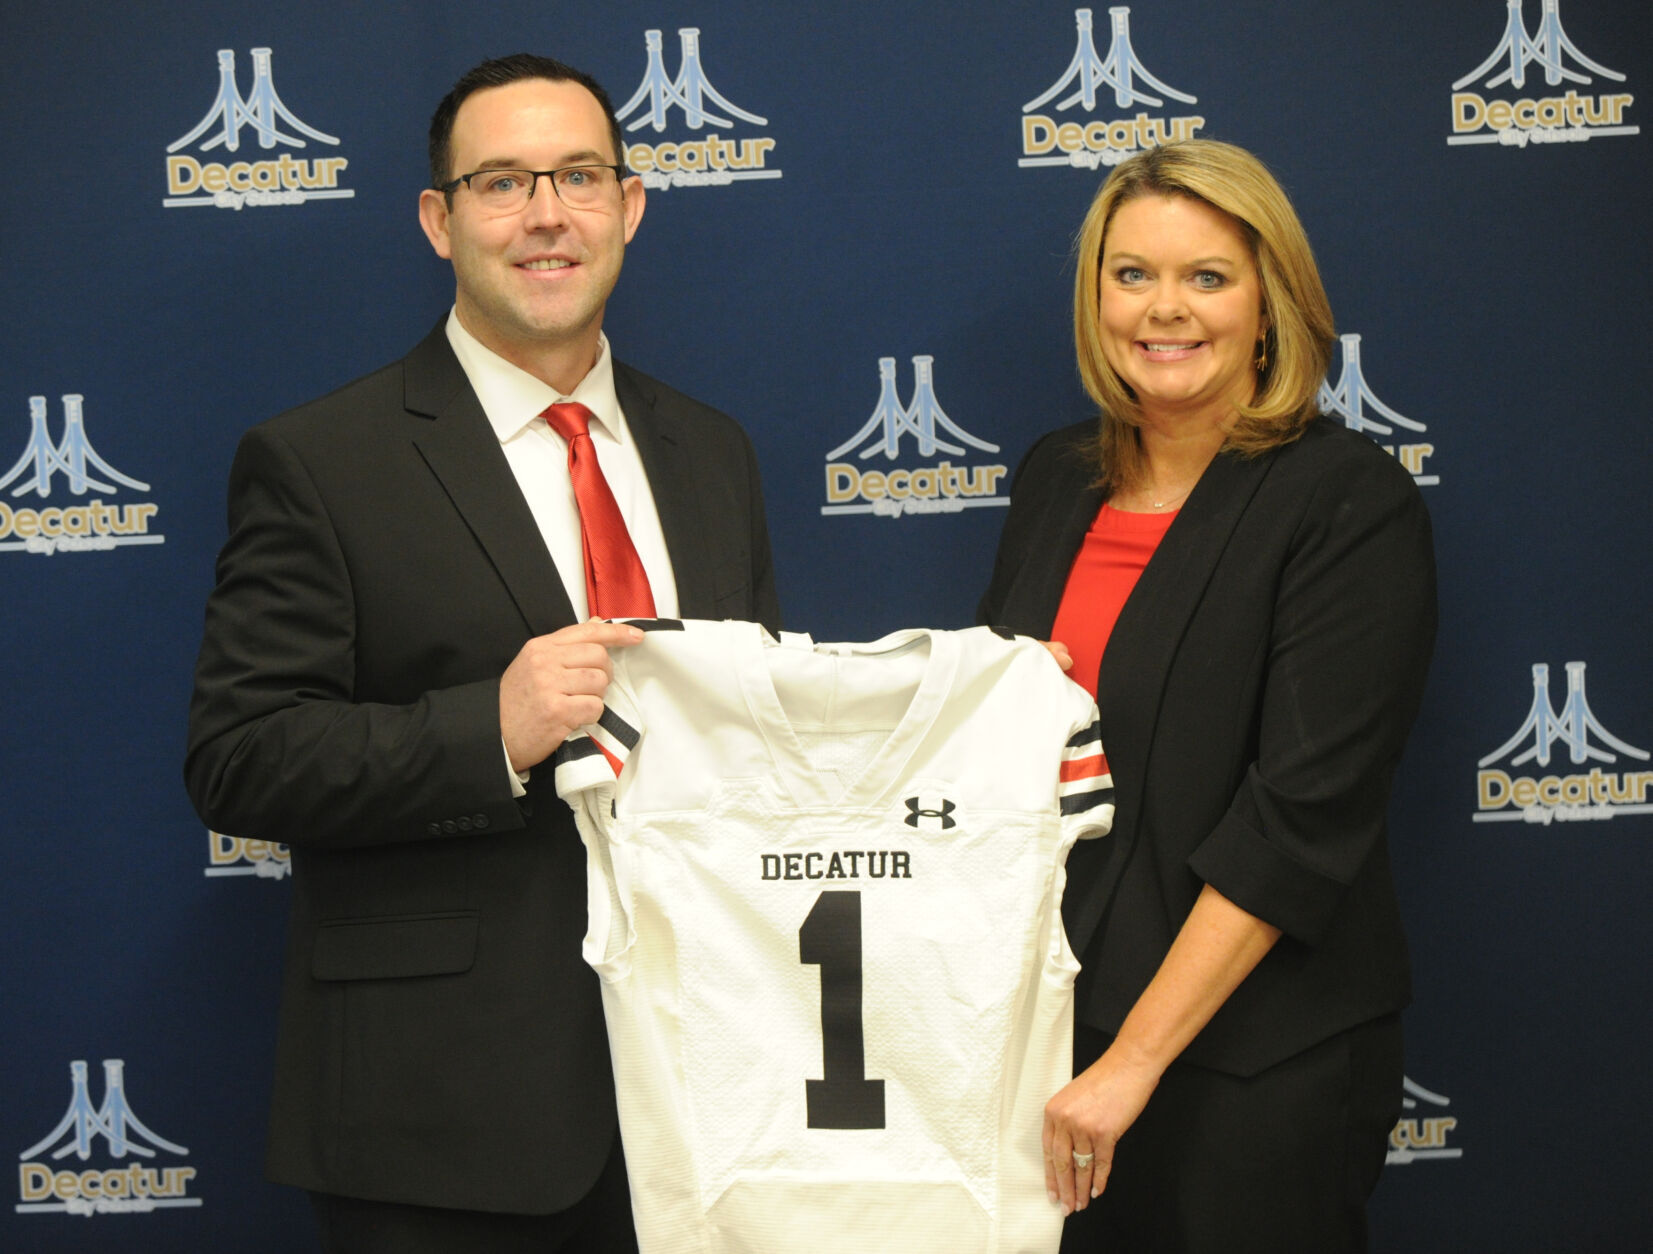 Ritter tapped as new Decatur High head football coach